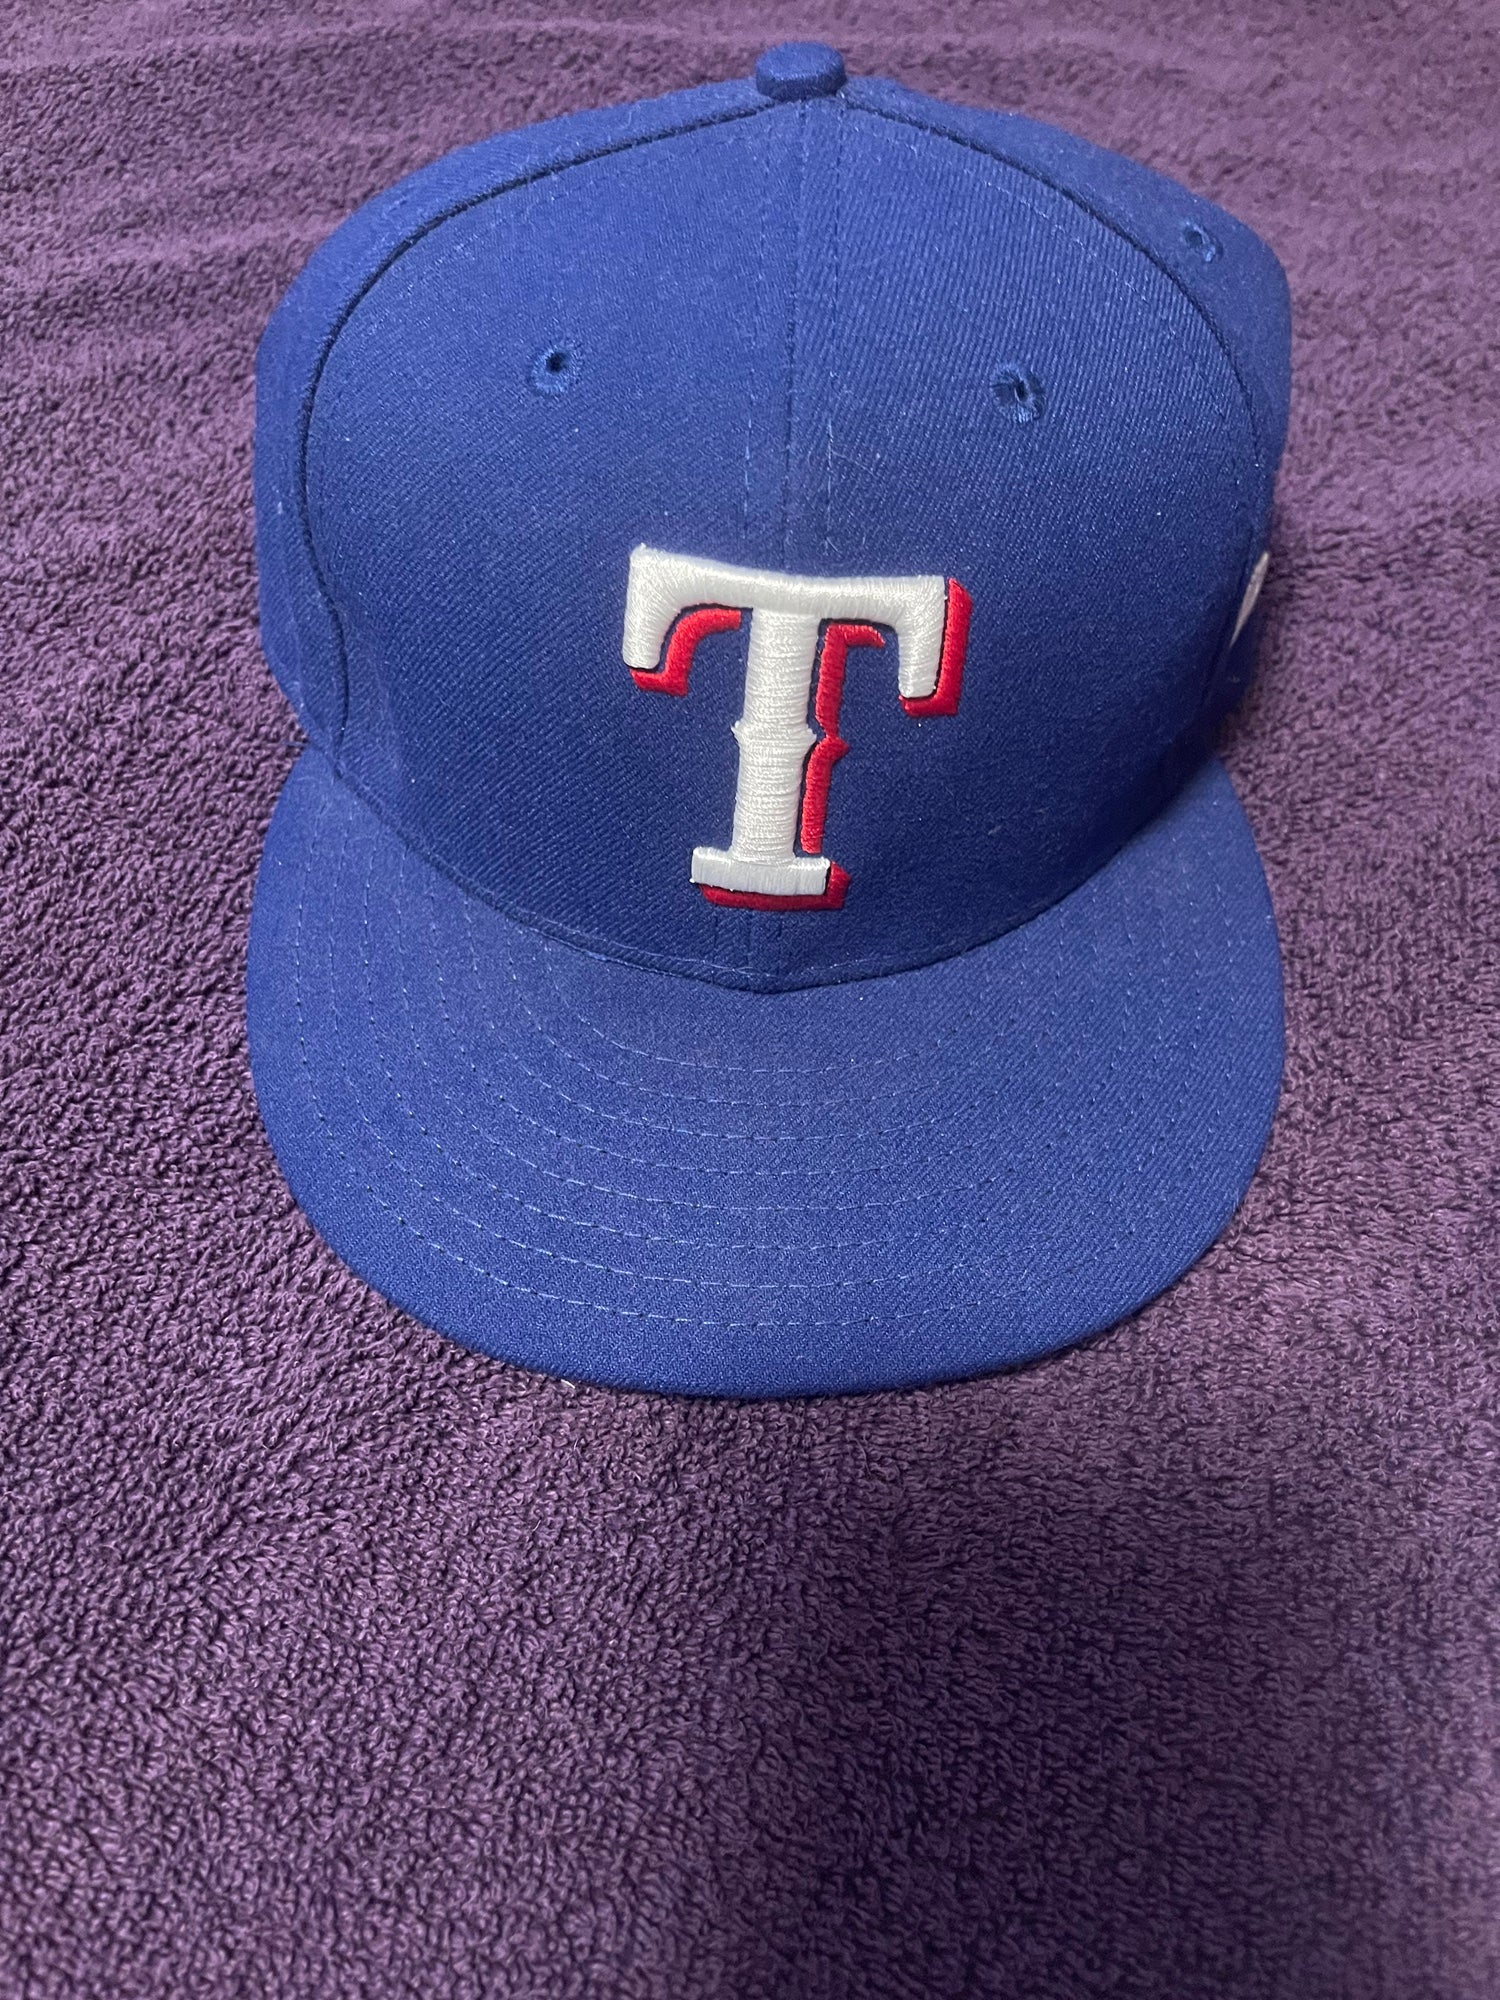 TEXAS RANGERS MLB SUMMIT 59FIFTY CAP Lids HD Size 7 5/8